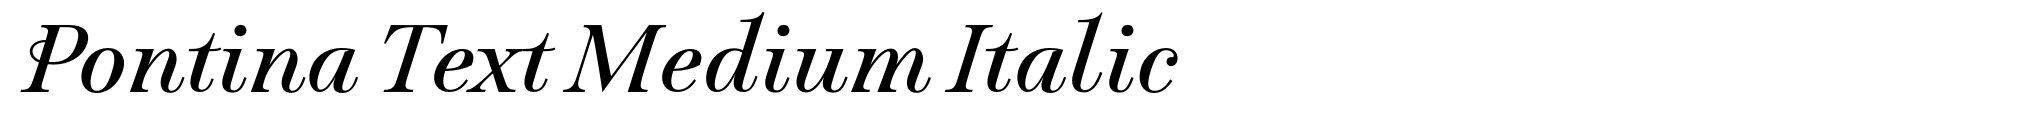 Pontina Text Medium Italic image